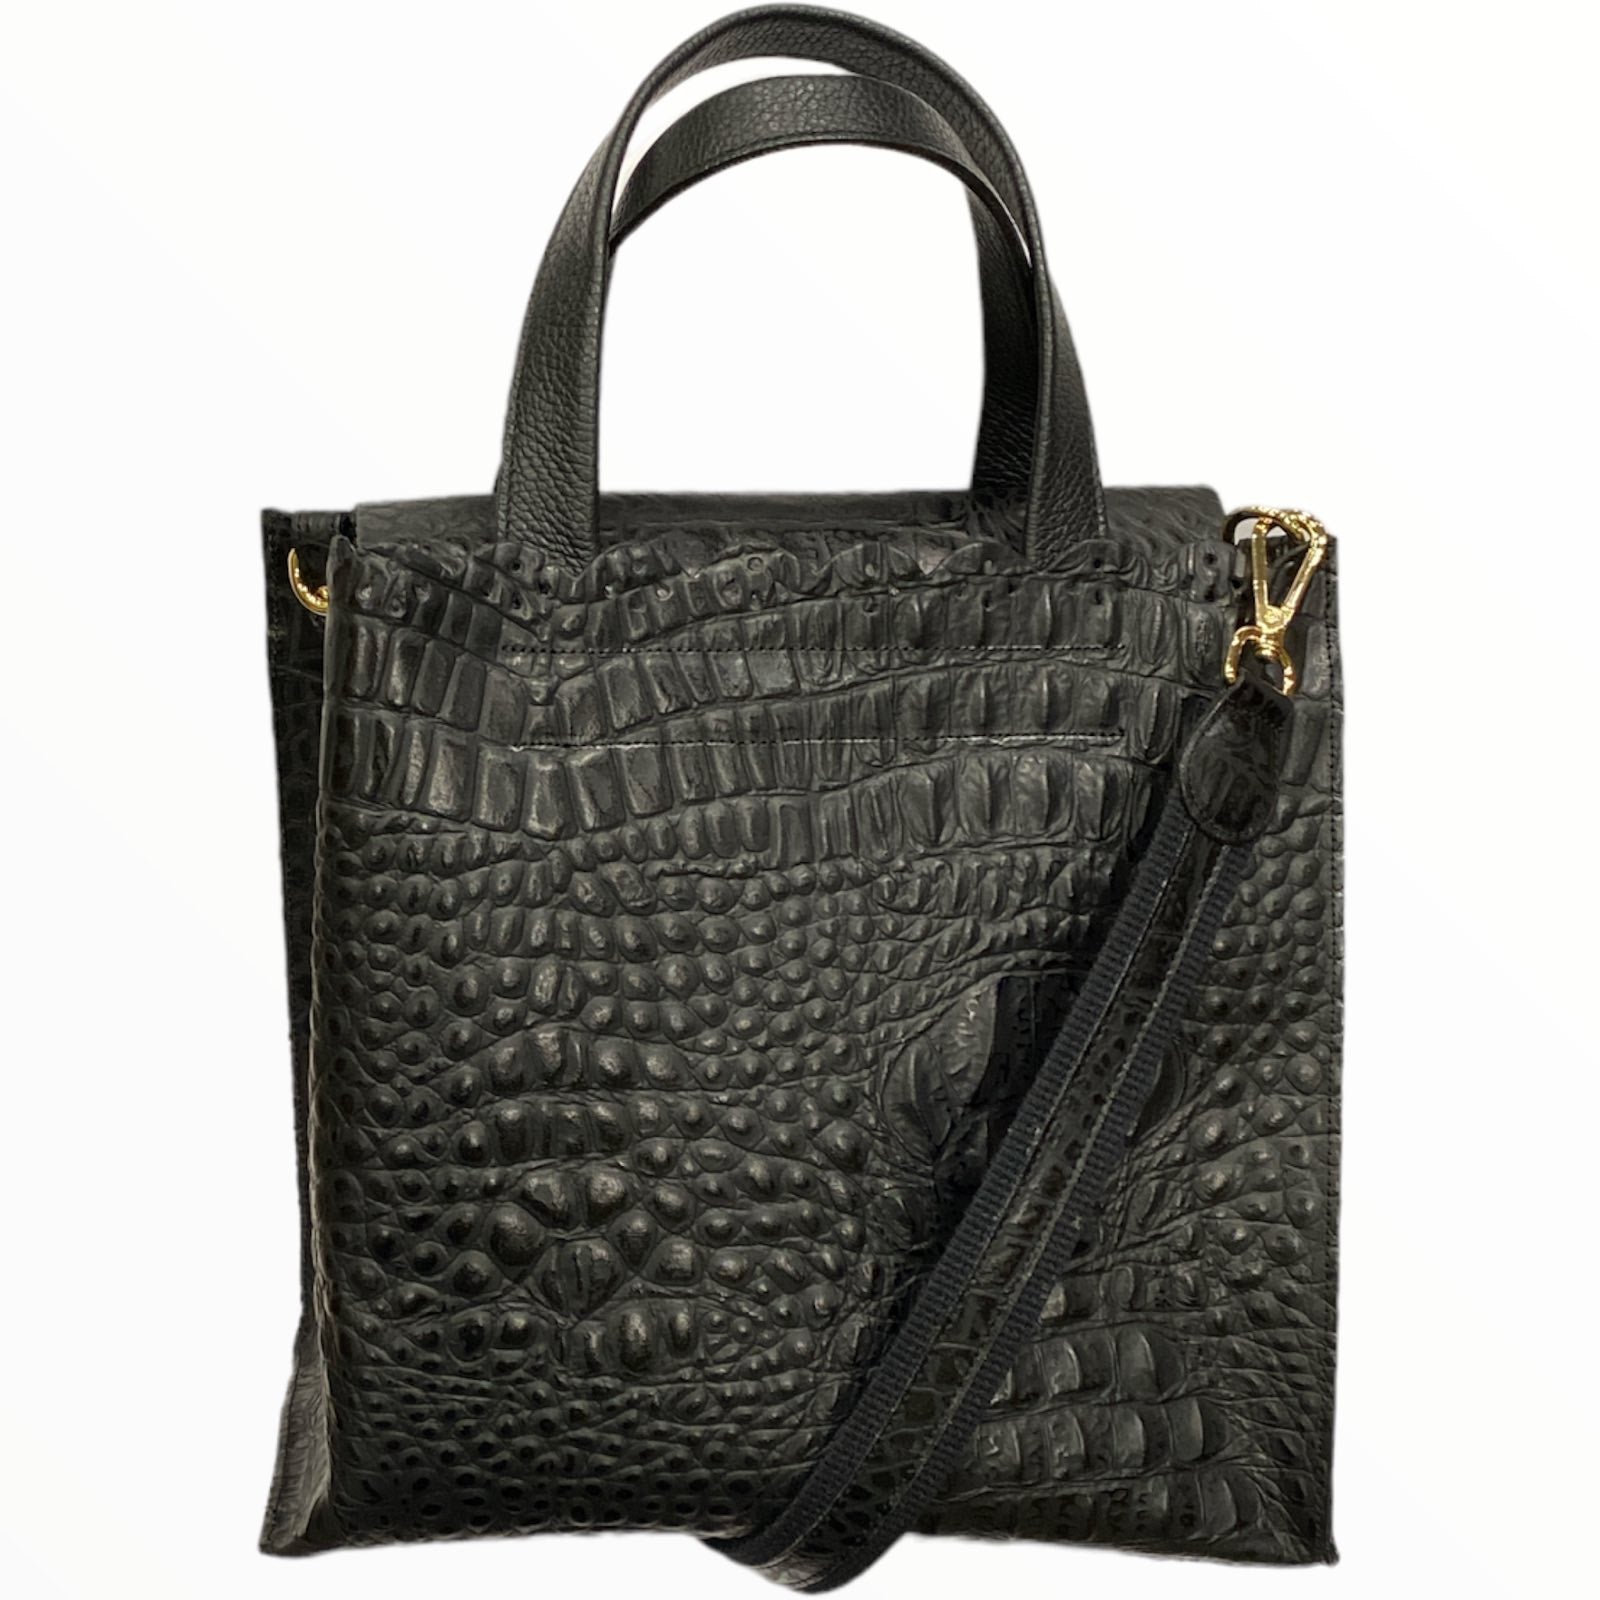 Diva M. Black alligator-print leather tote bag